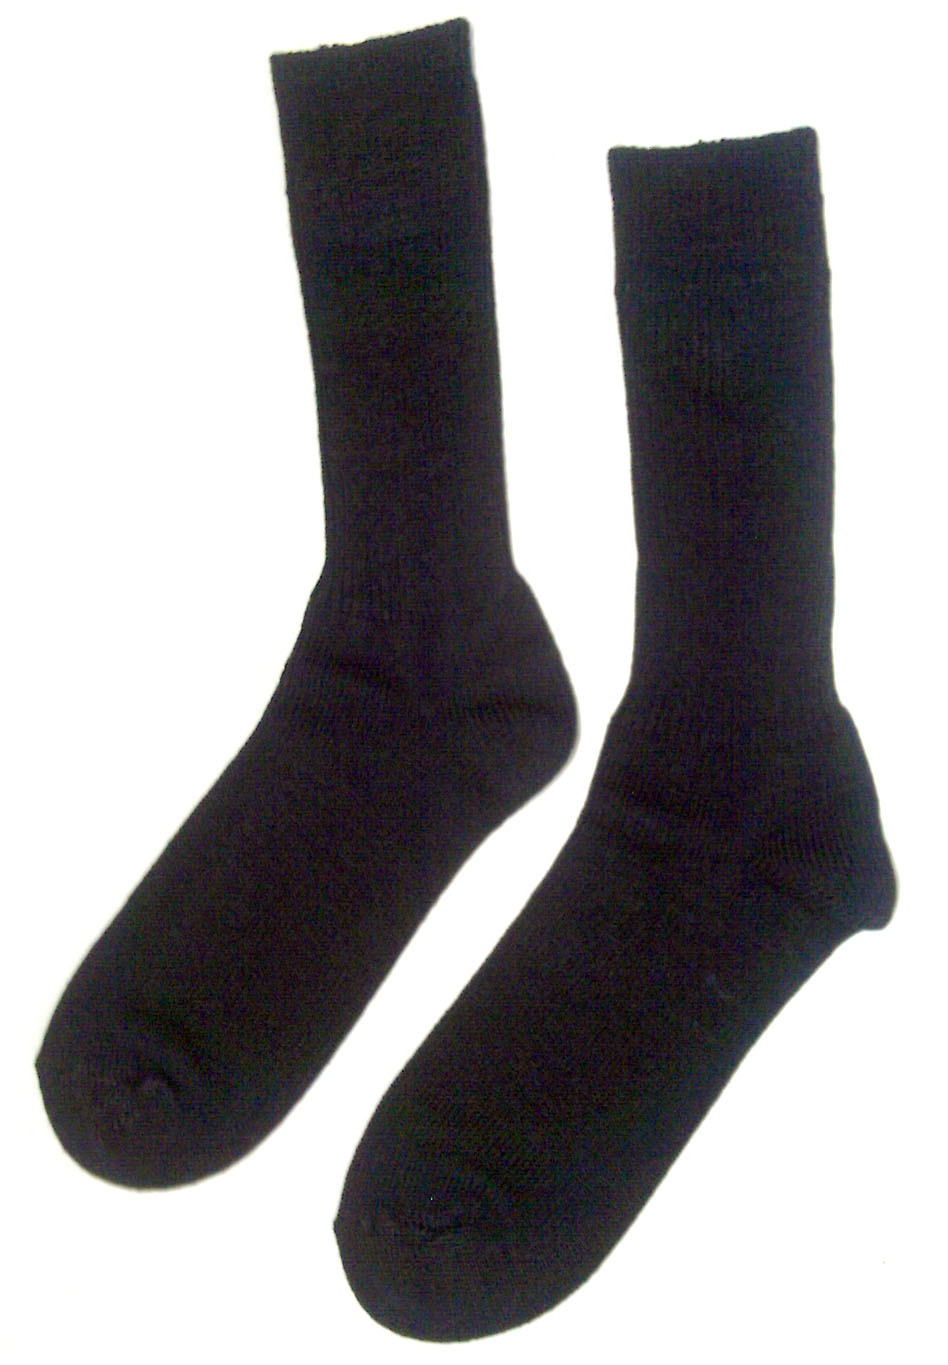 [Image: s-socks.jpg]